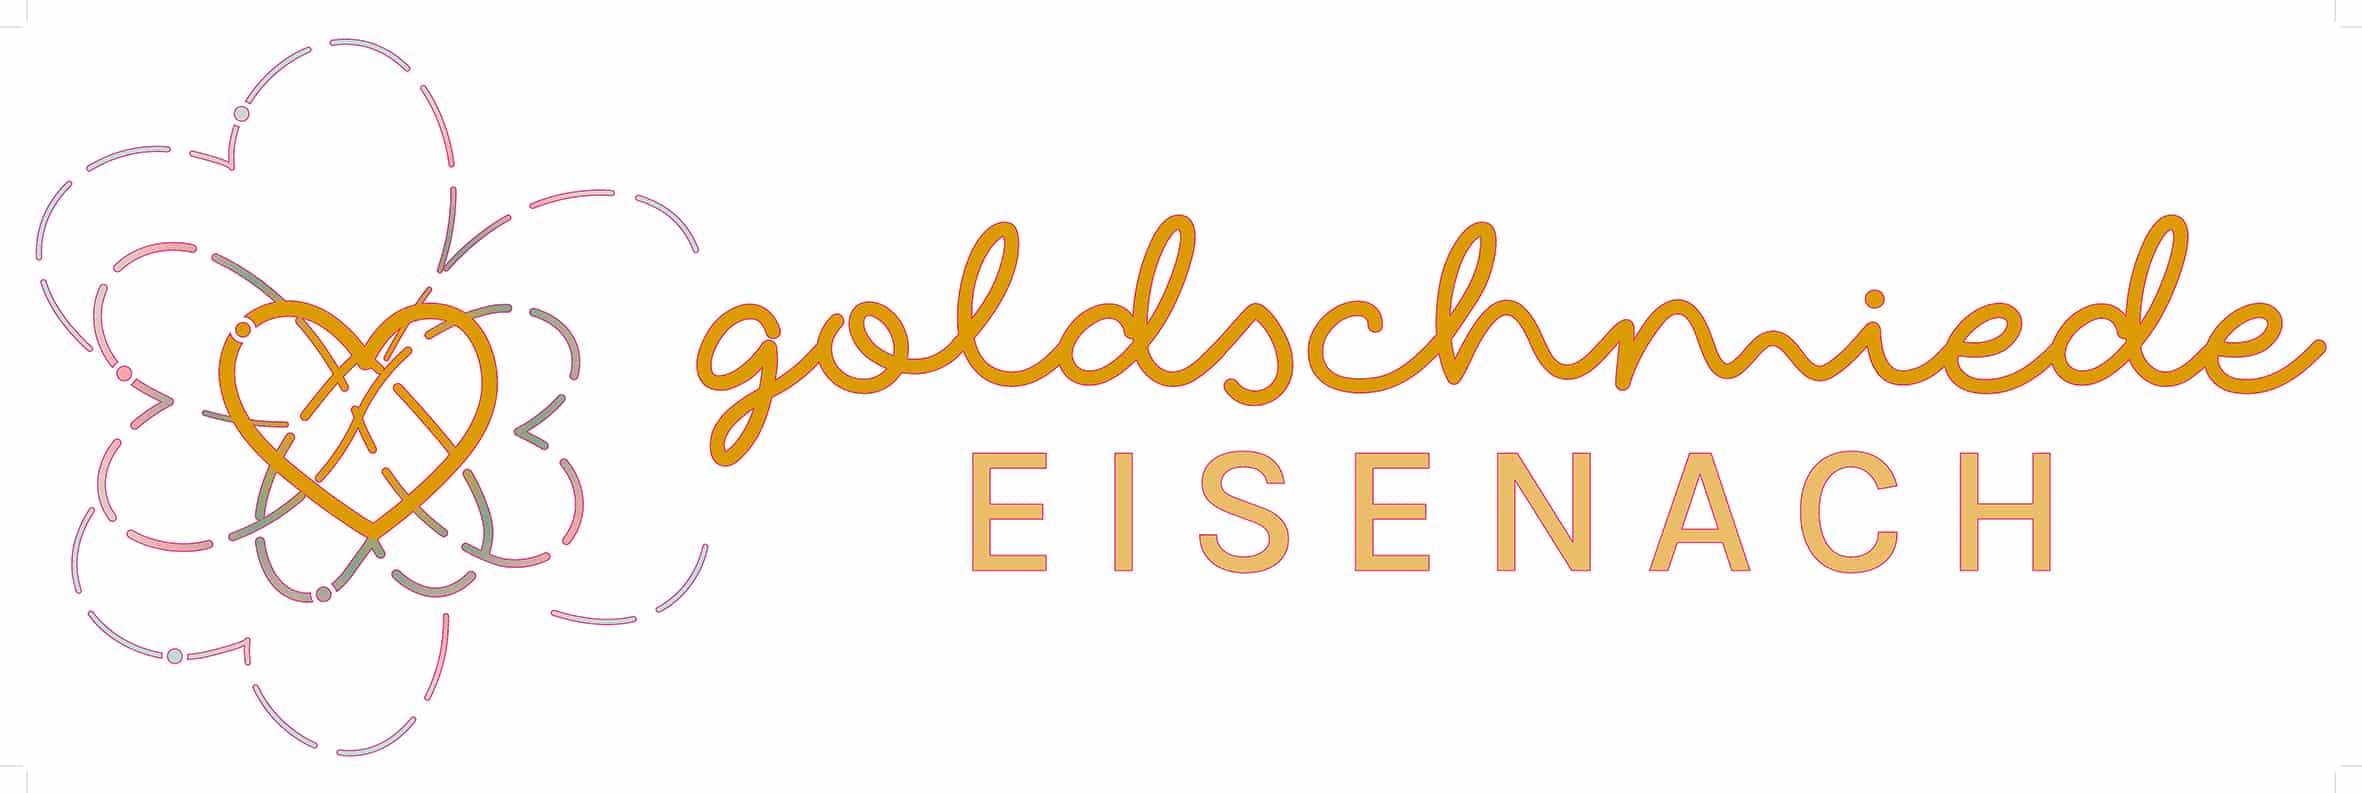 Logo_Projekt_Goldschmiede_Eisenach